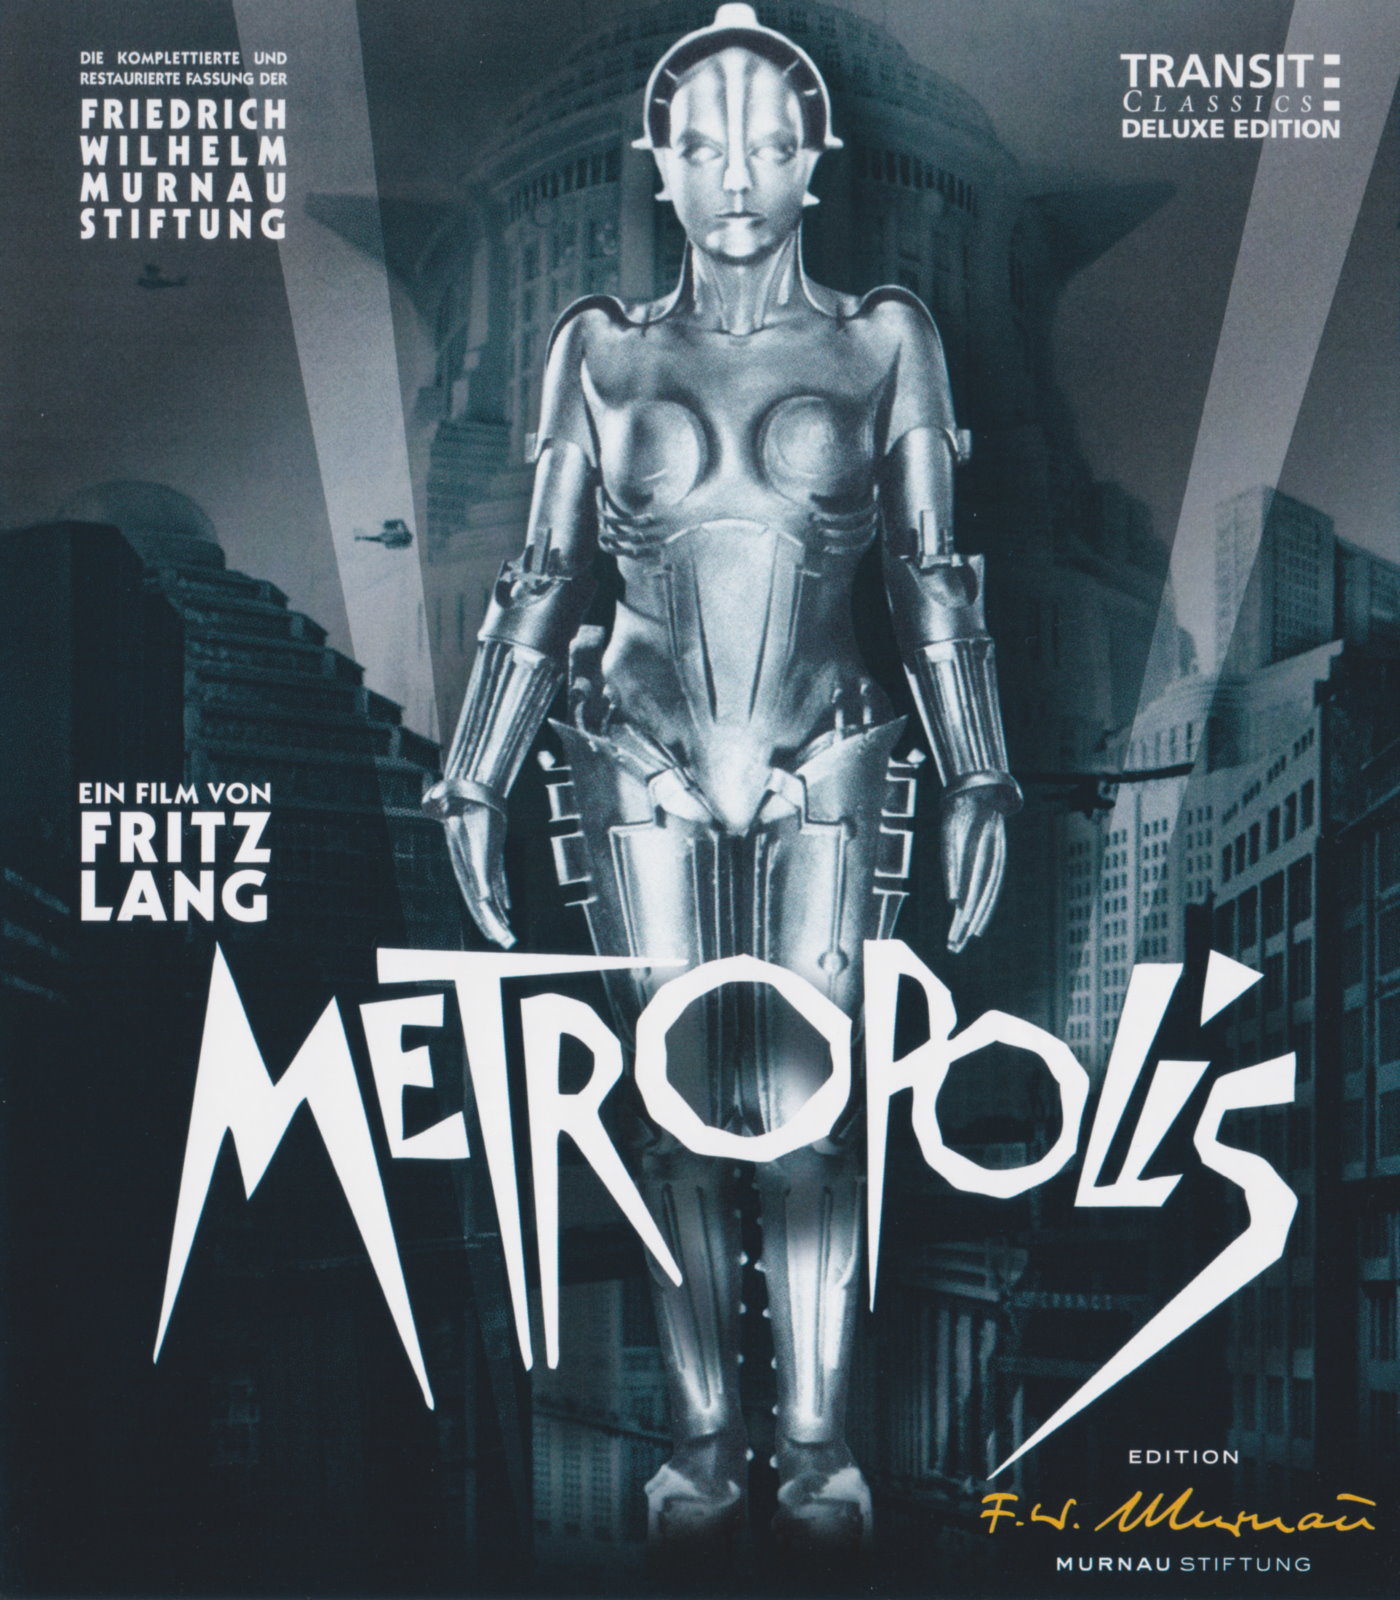 Cover - Metropolis.jpg